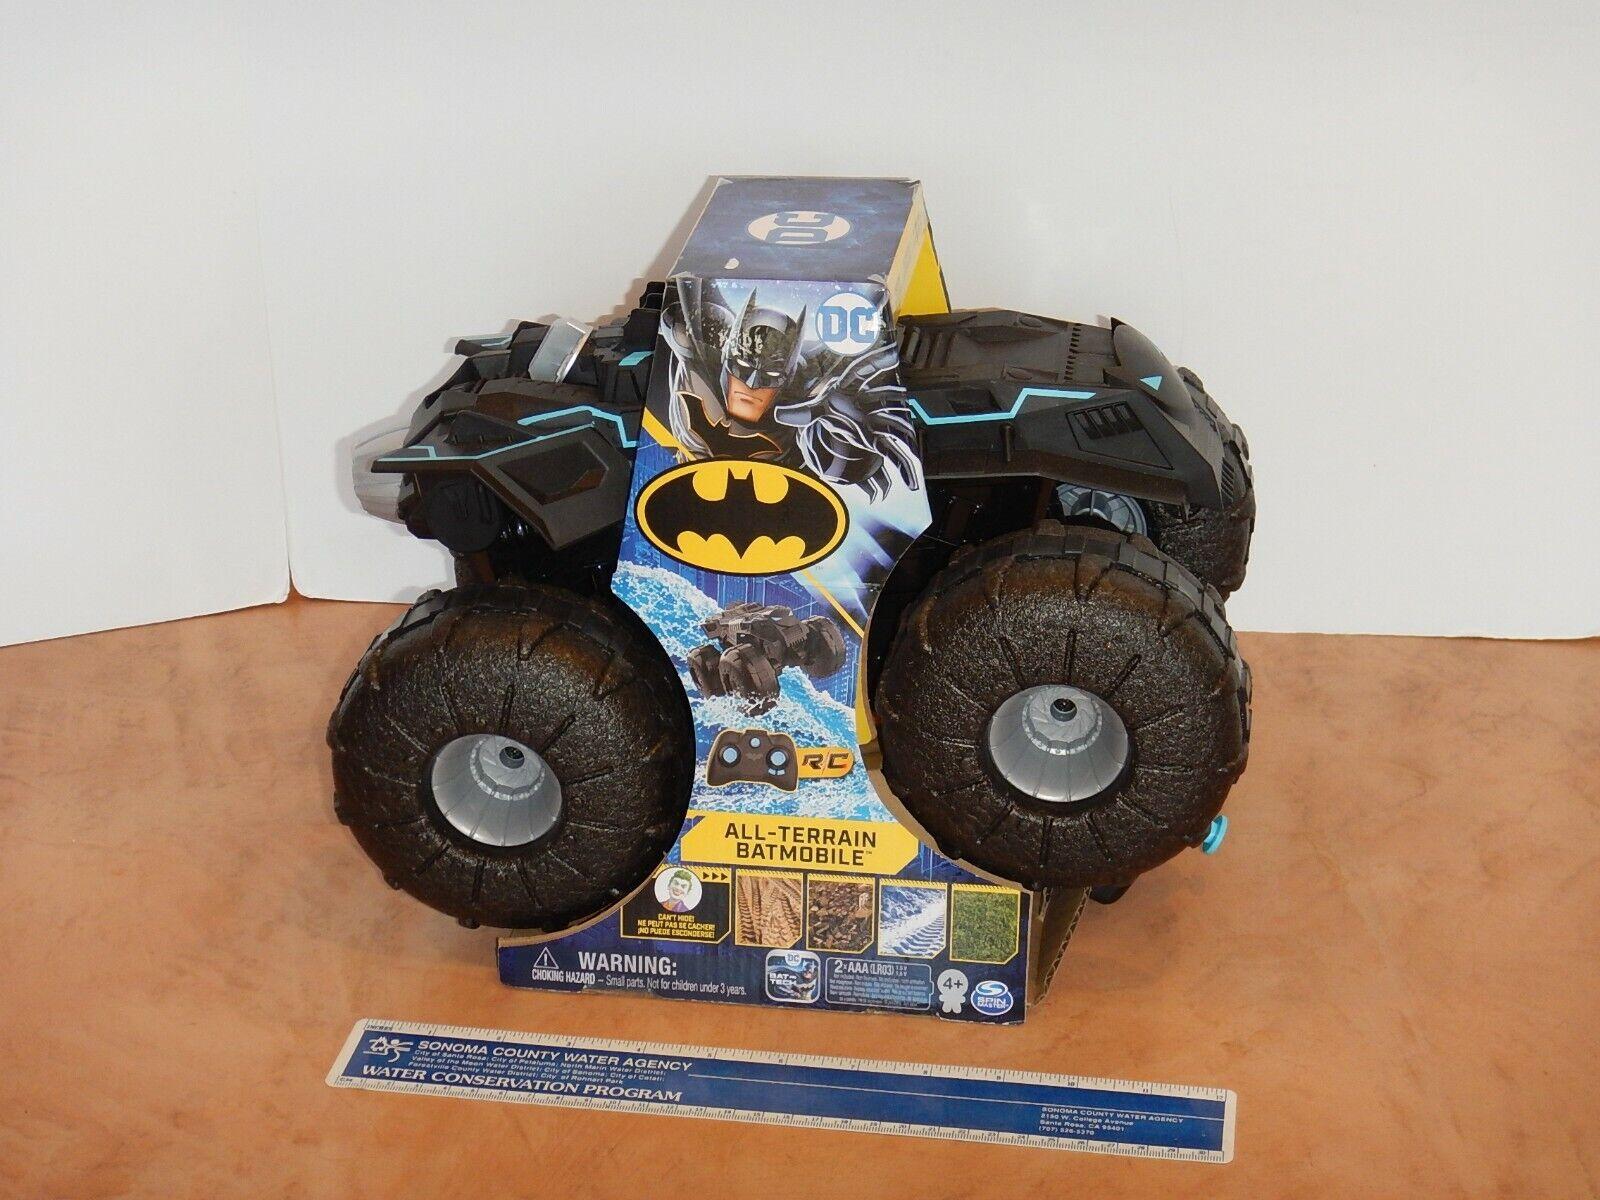 Batman All Terrain Rc Batmobile: Sales and Deals for the All Terrain RC Batmobile